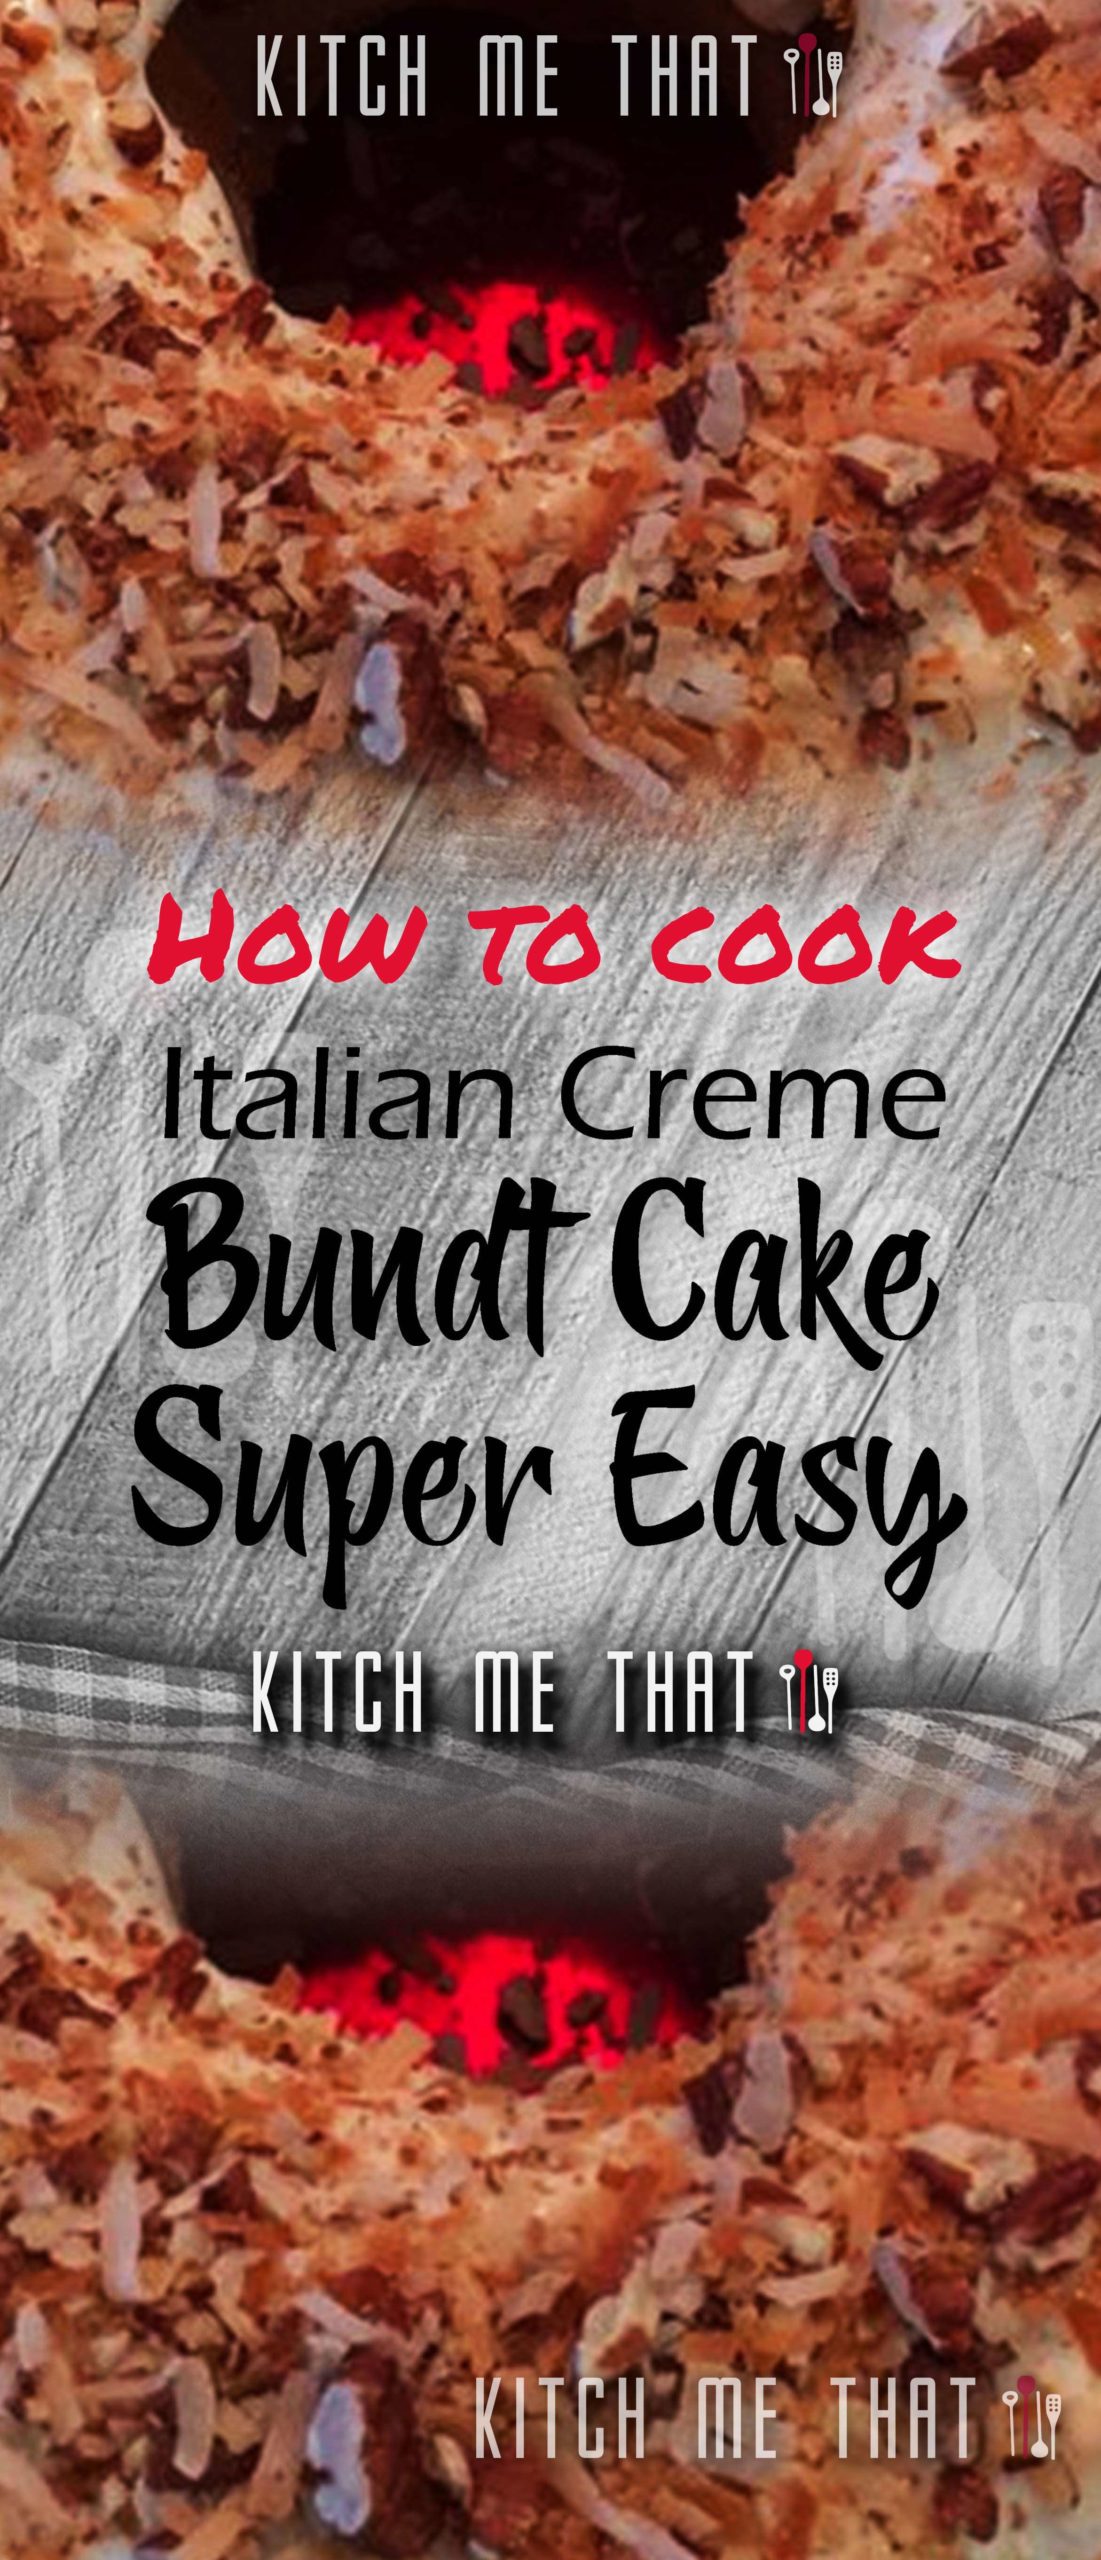 Italian Creme Bundt Cake !!